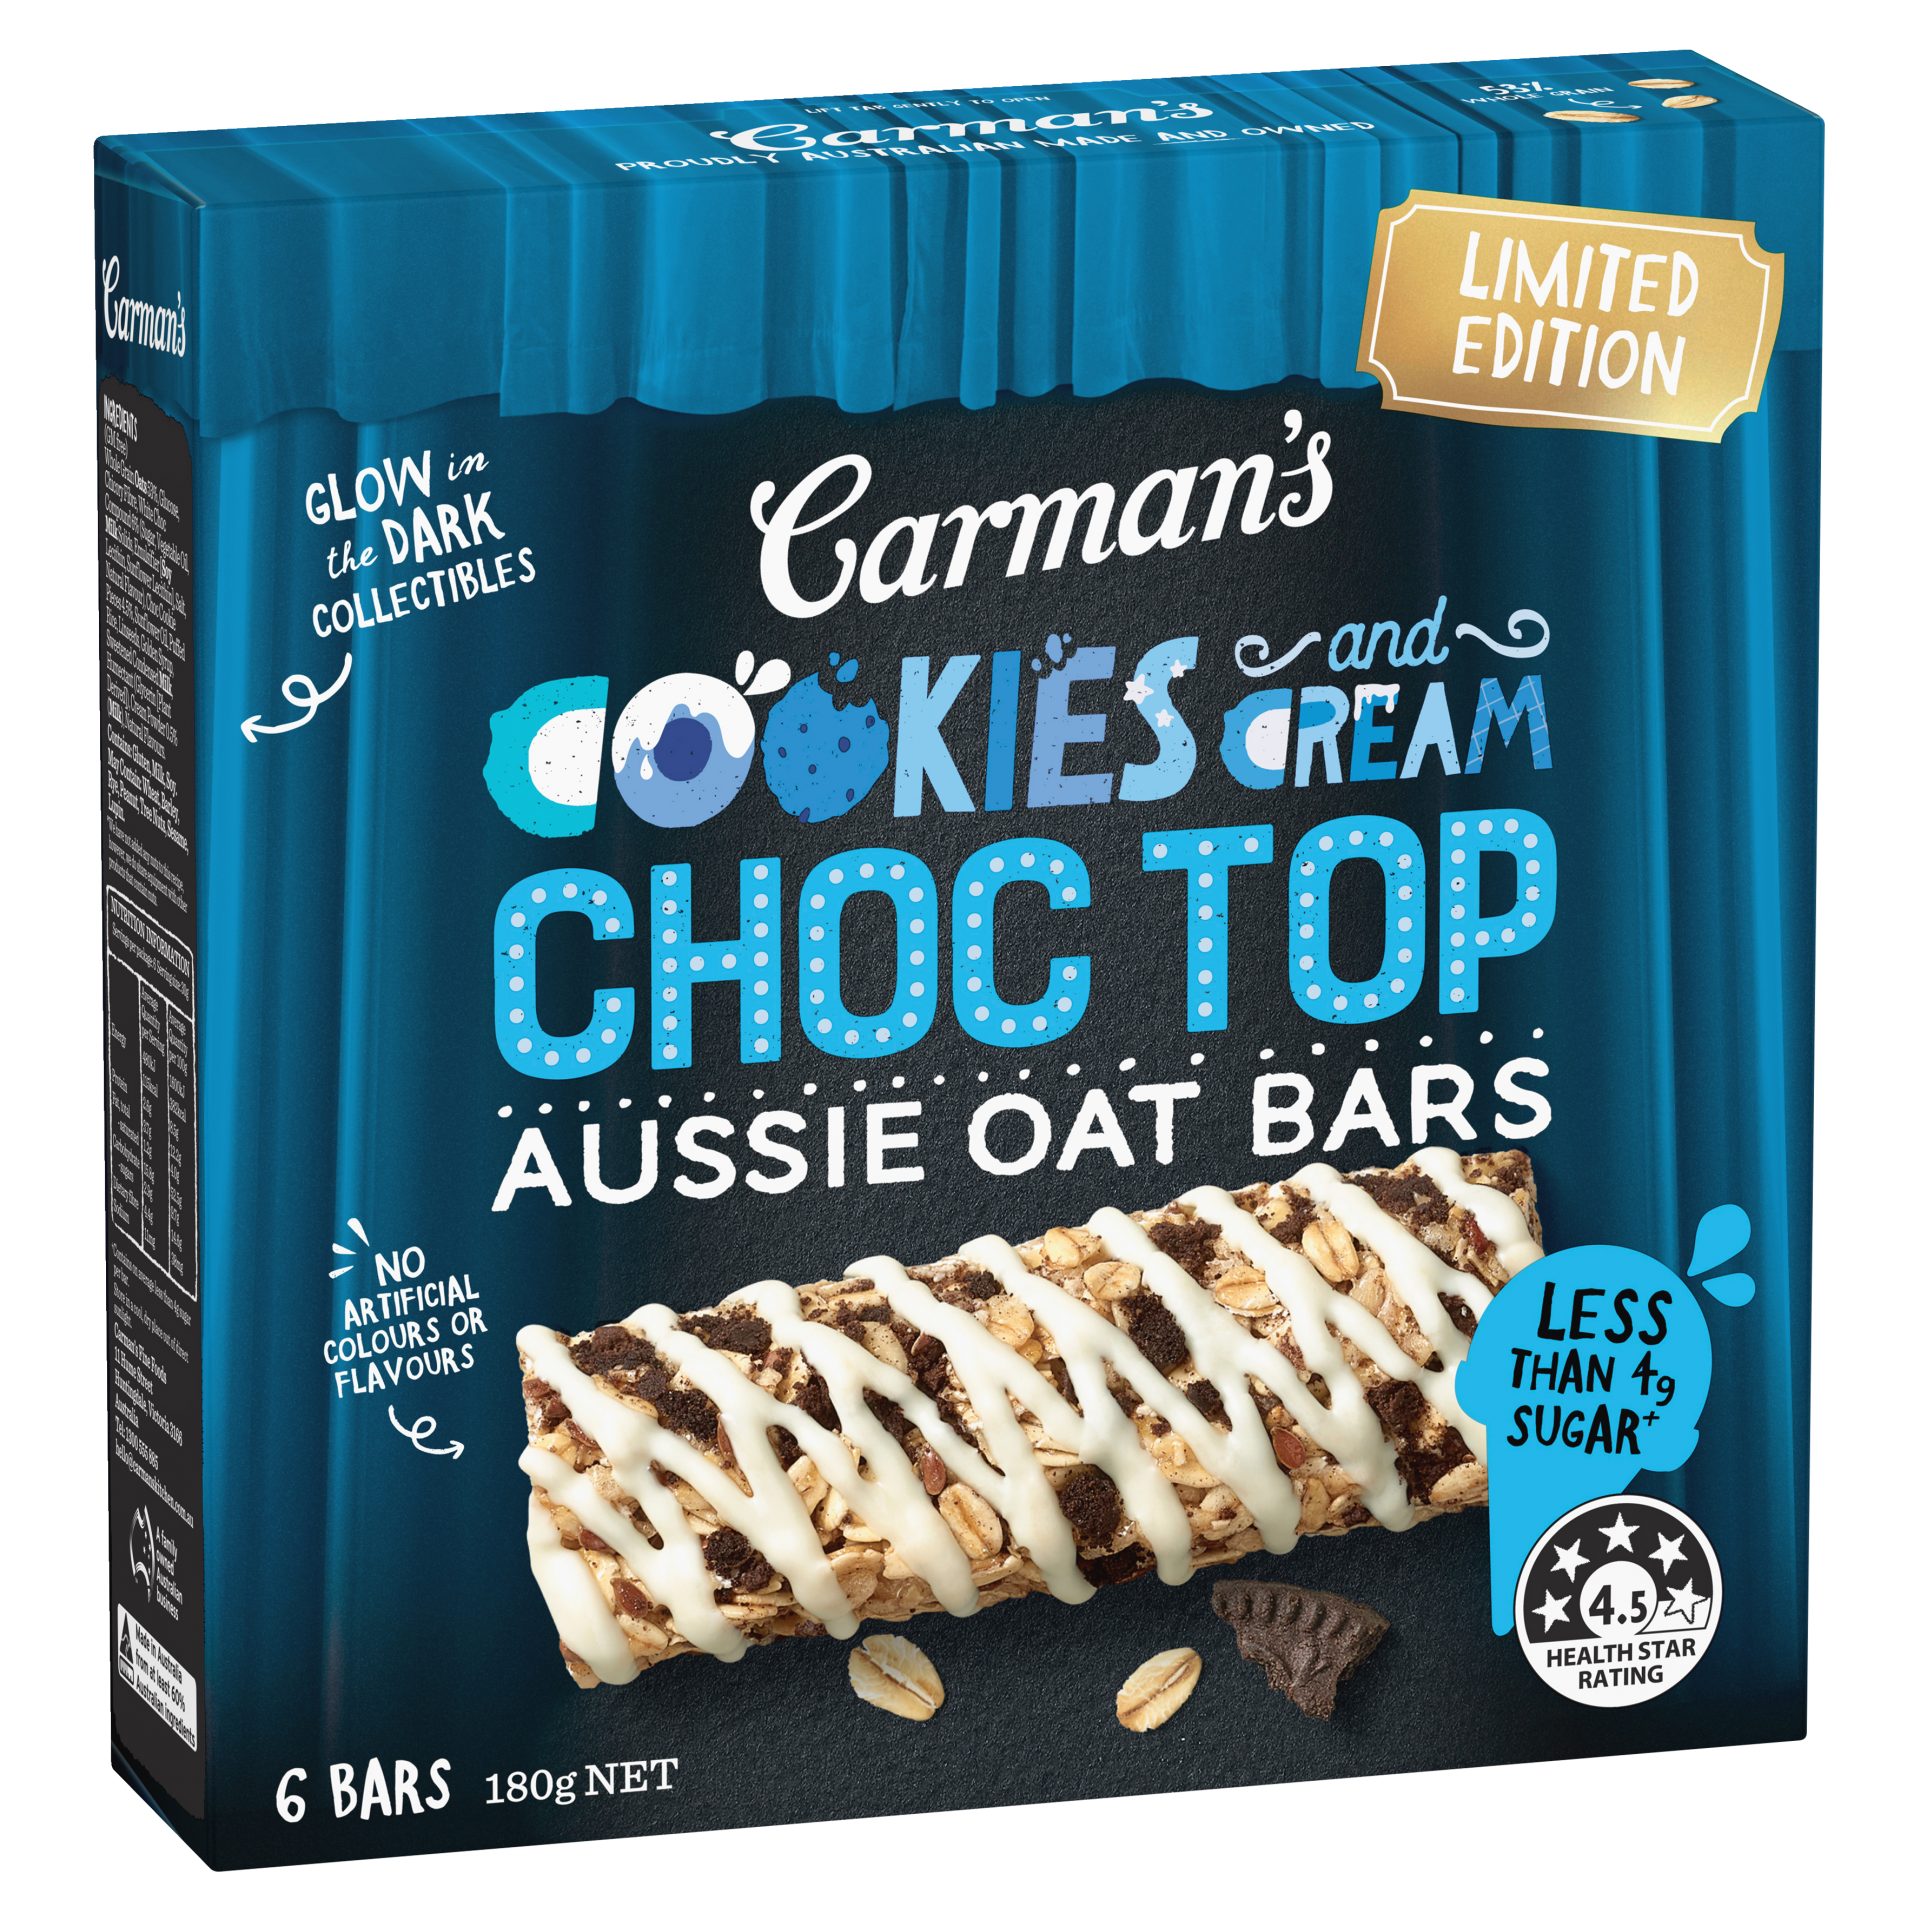 Aussie Oat Bars Cookies and Cream Choc Top